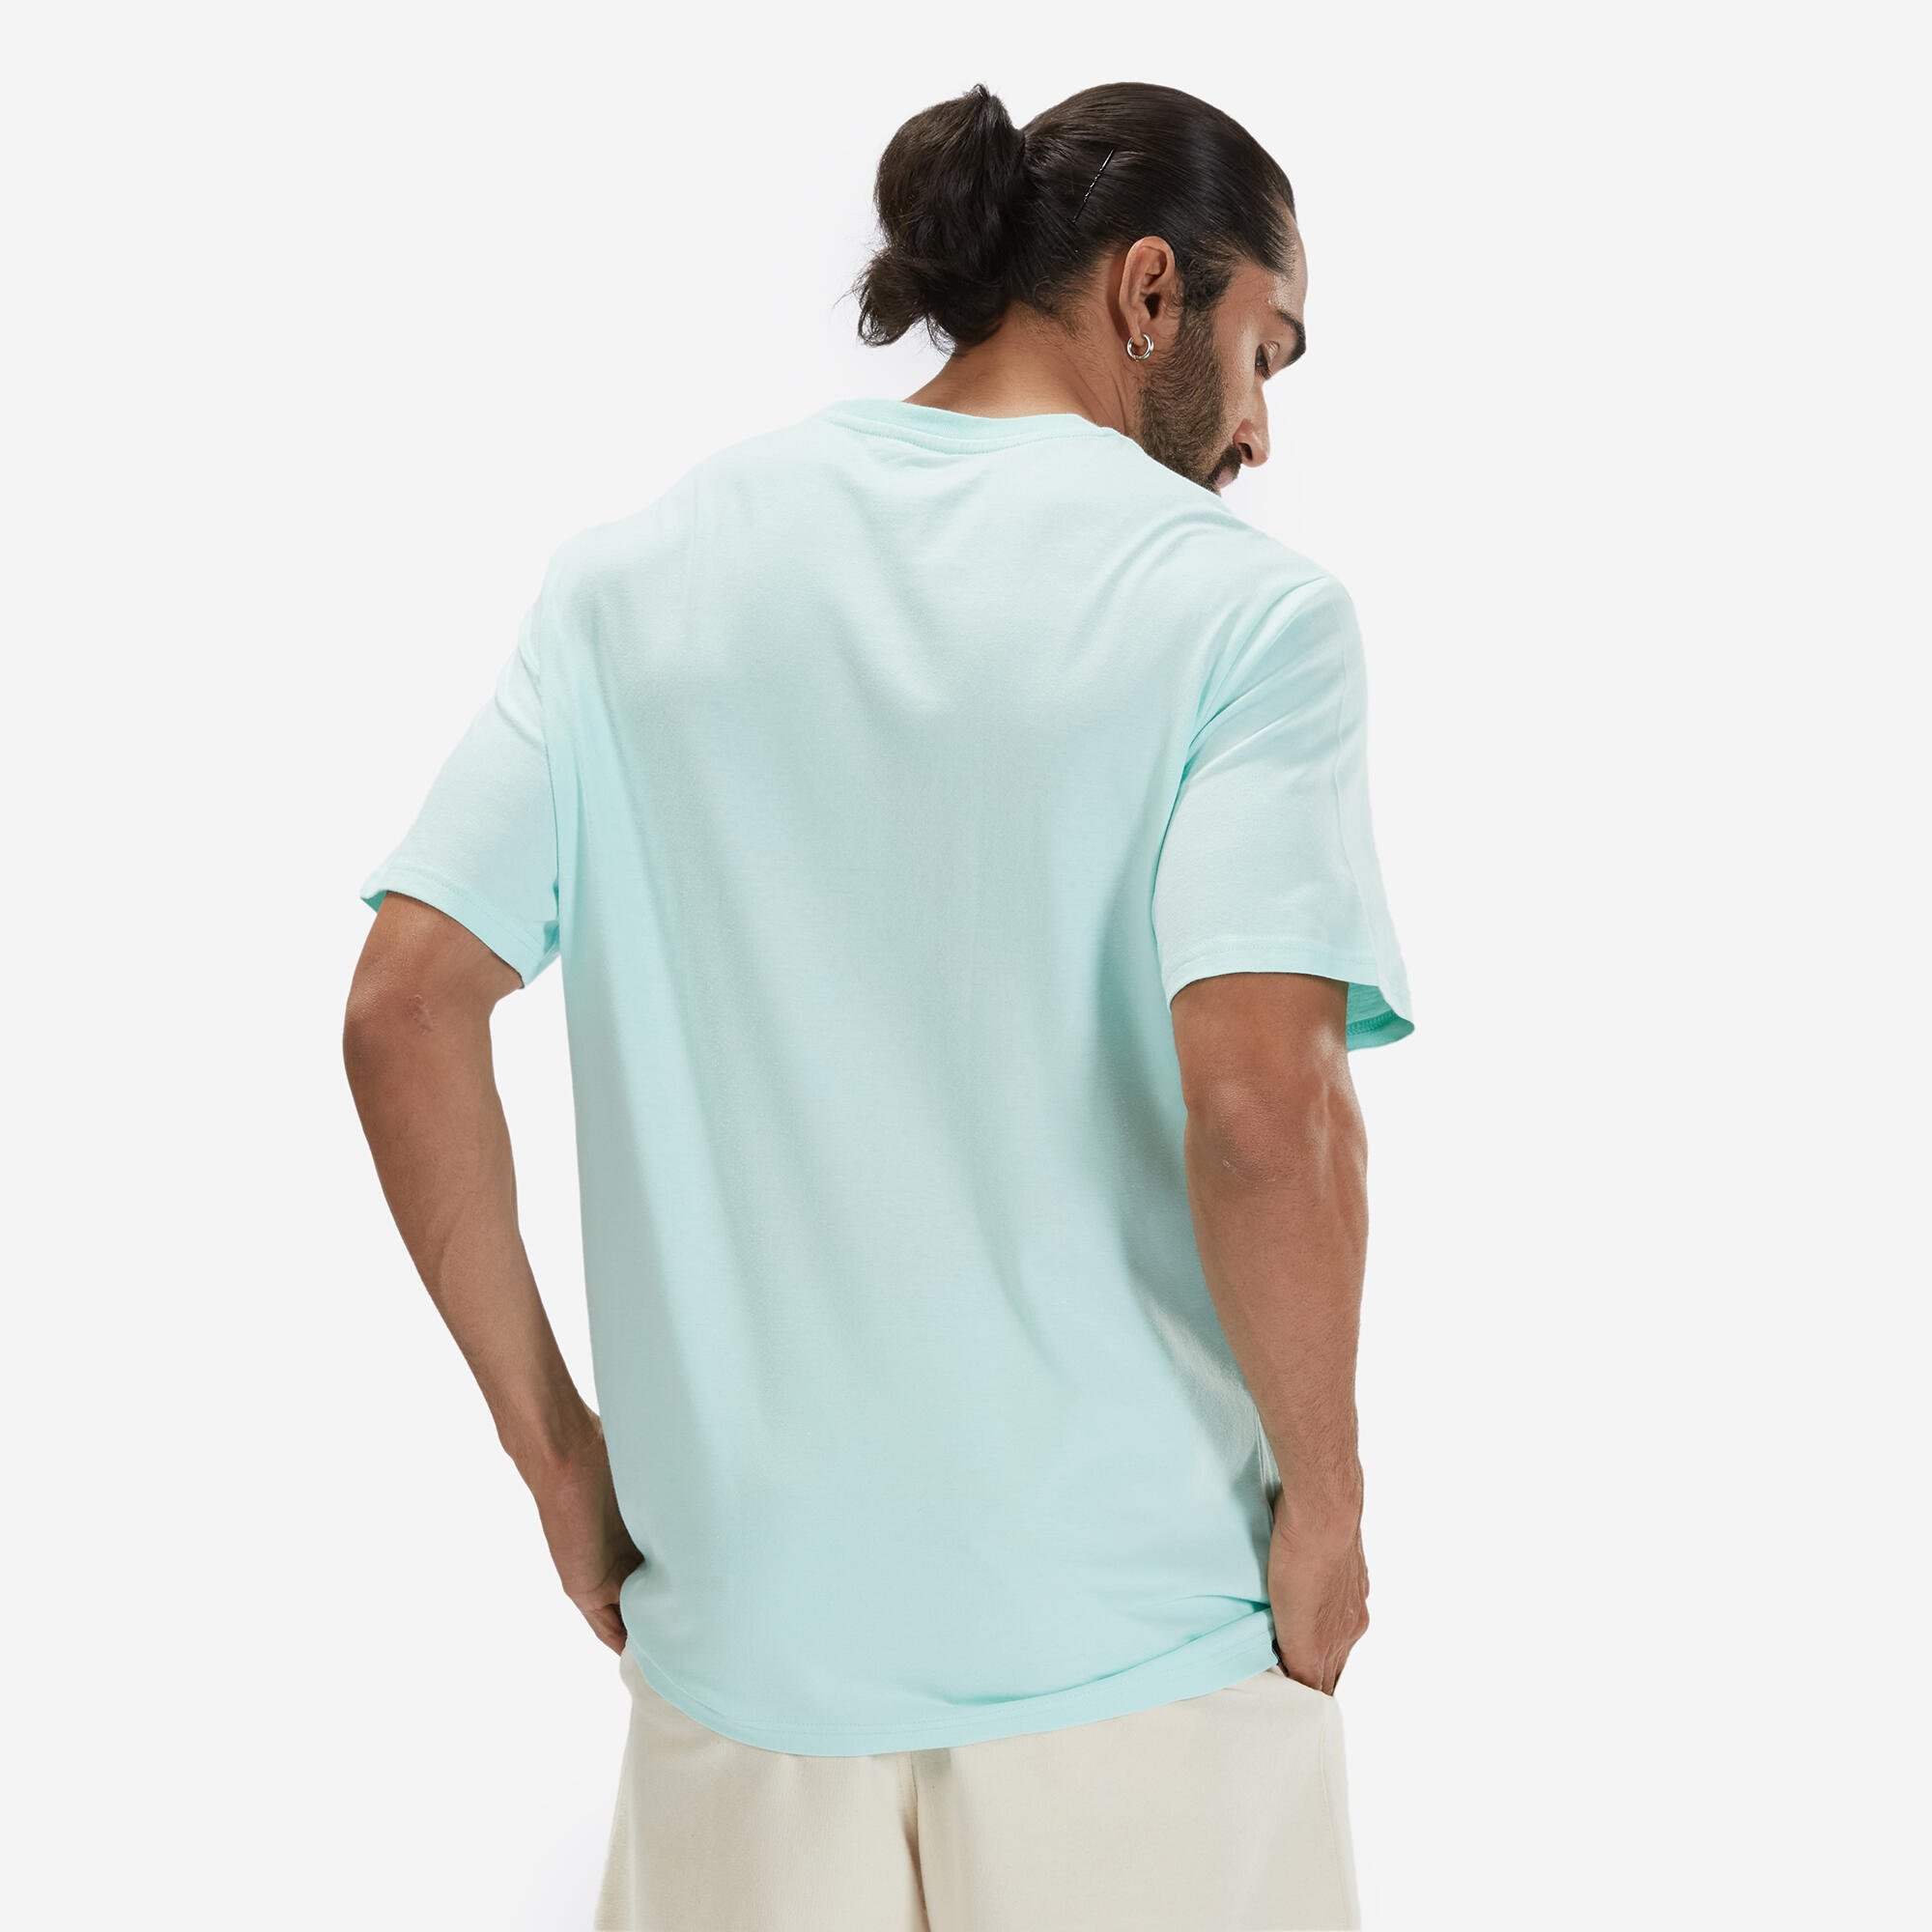 Men's Fitness T-Shirt 500 Essentials - Mint/Pastel 3/4